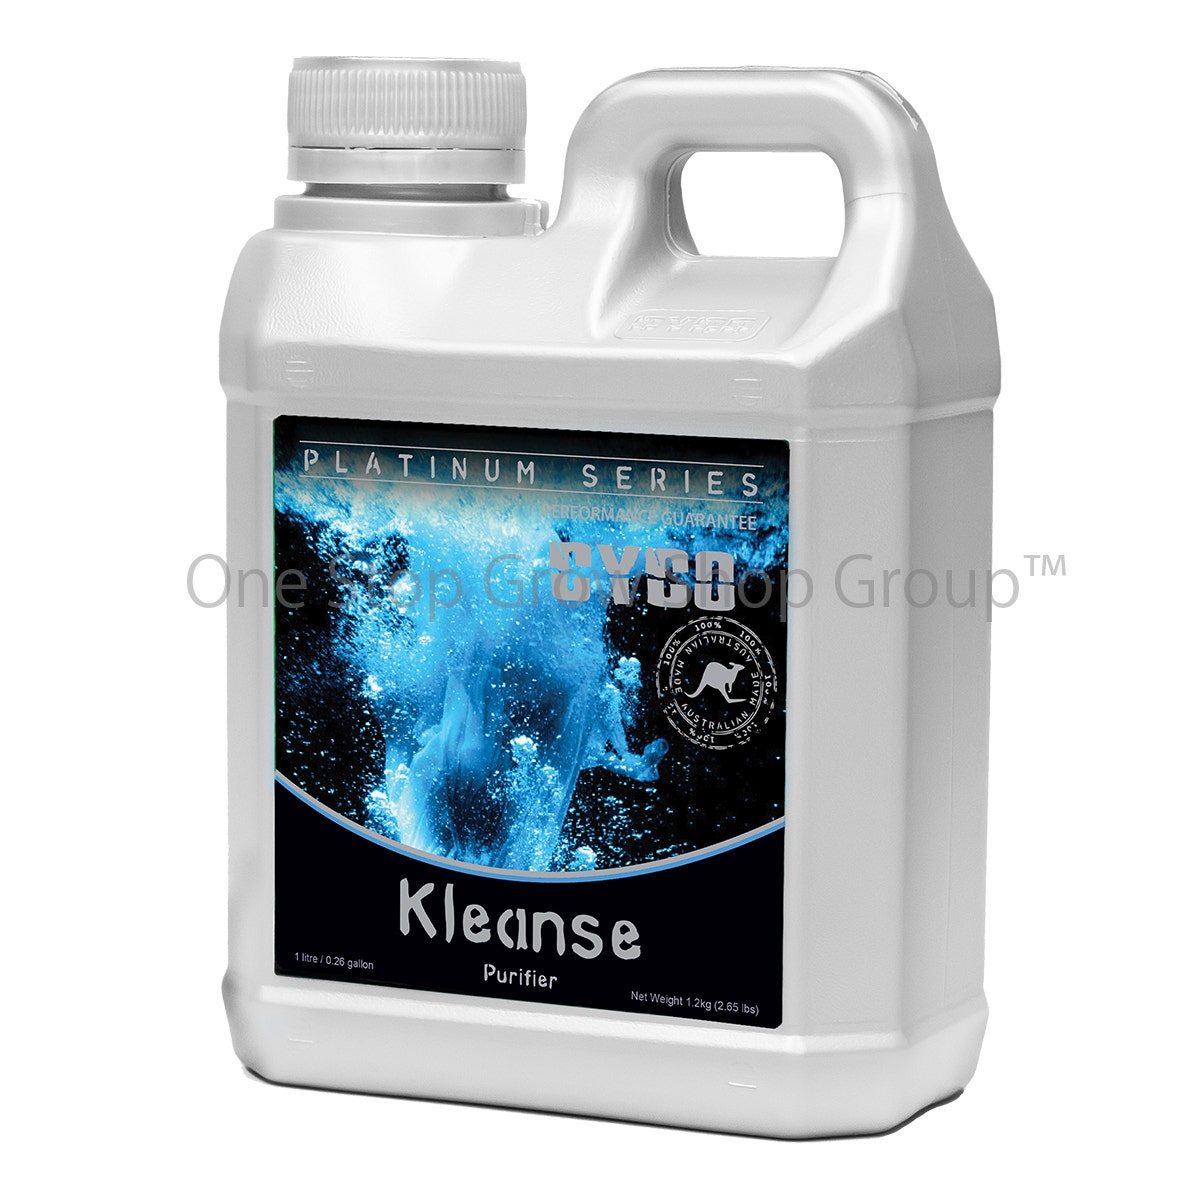 Cyco Nutrients - Platinum Series - Kleanse